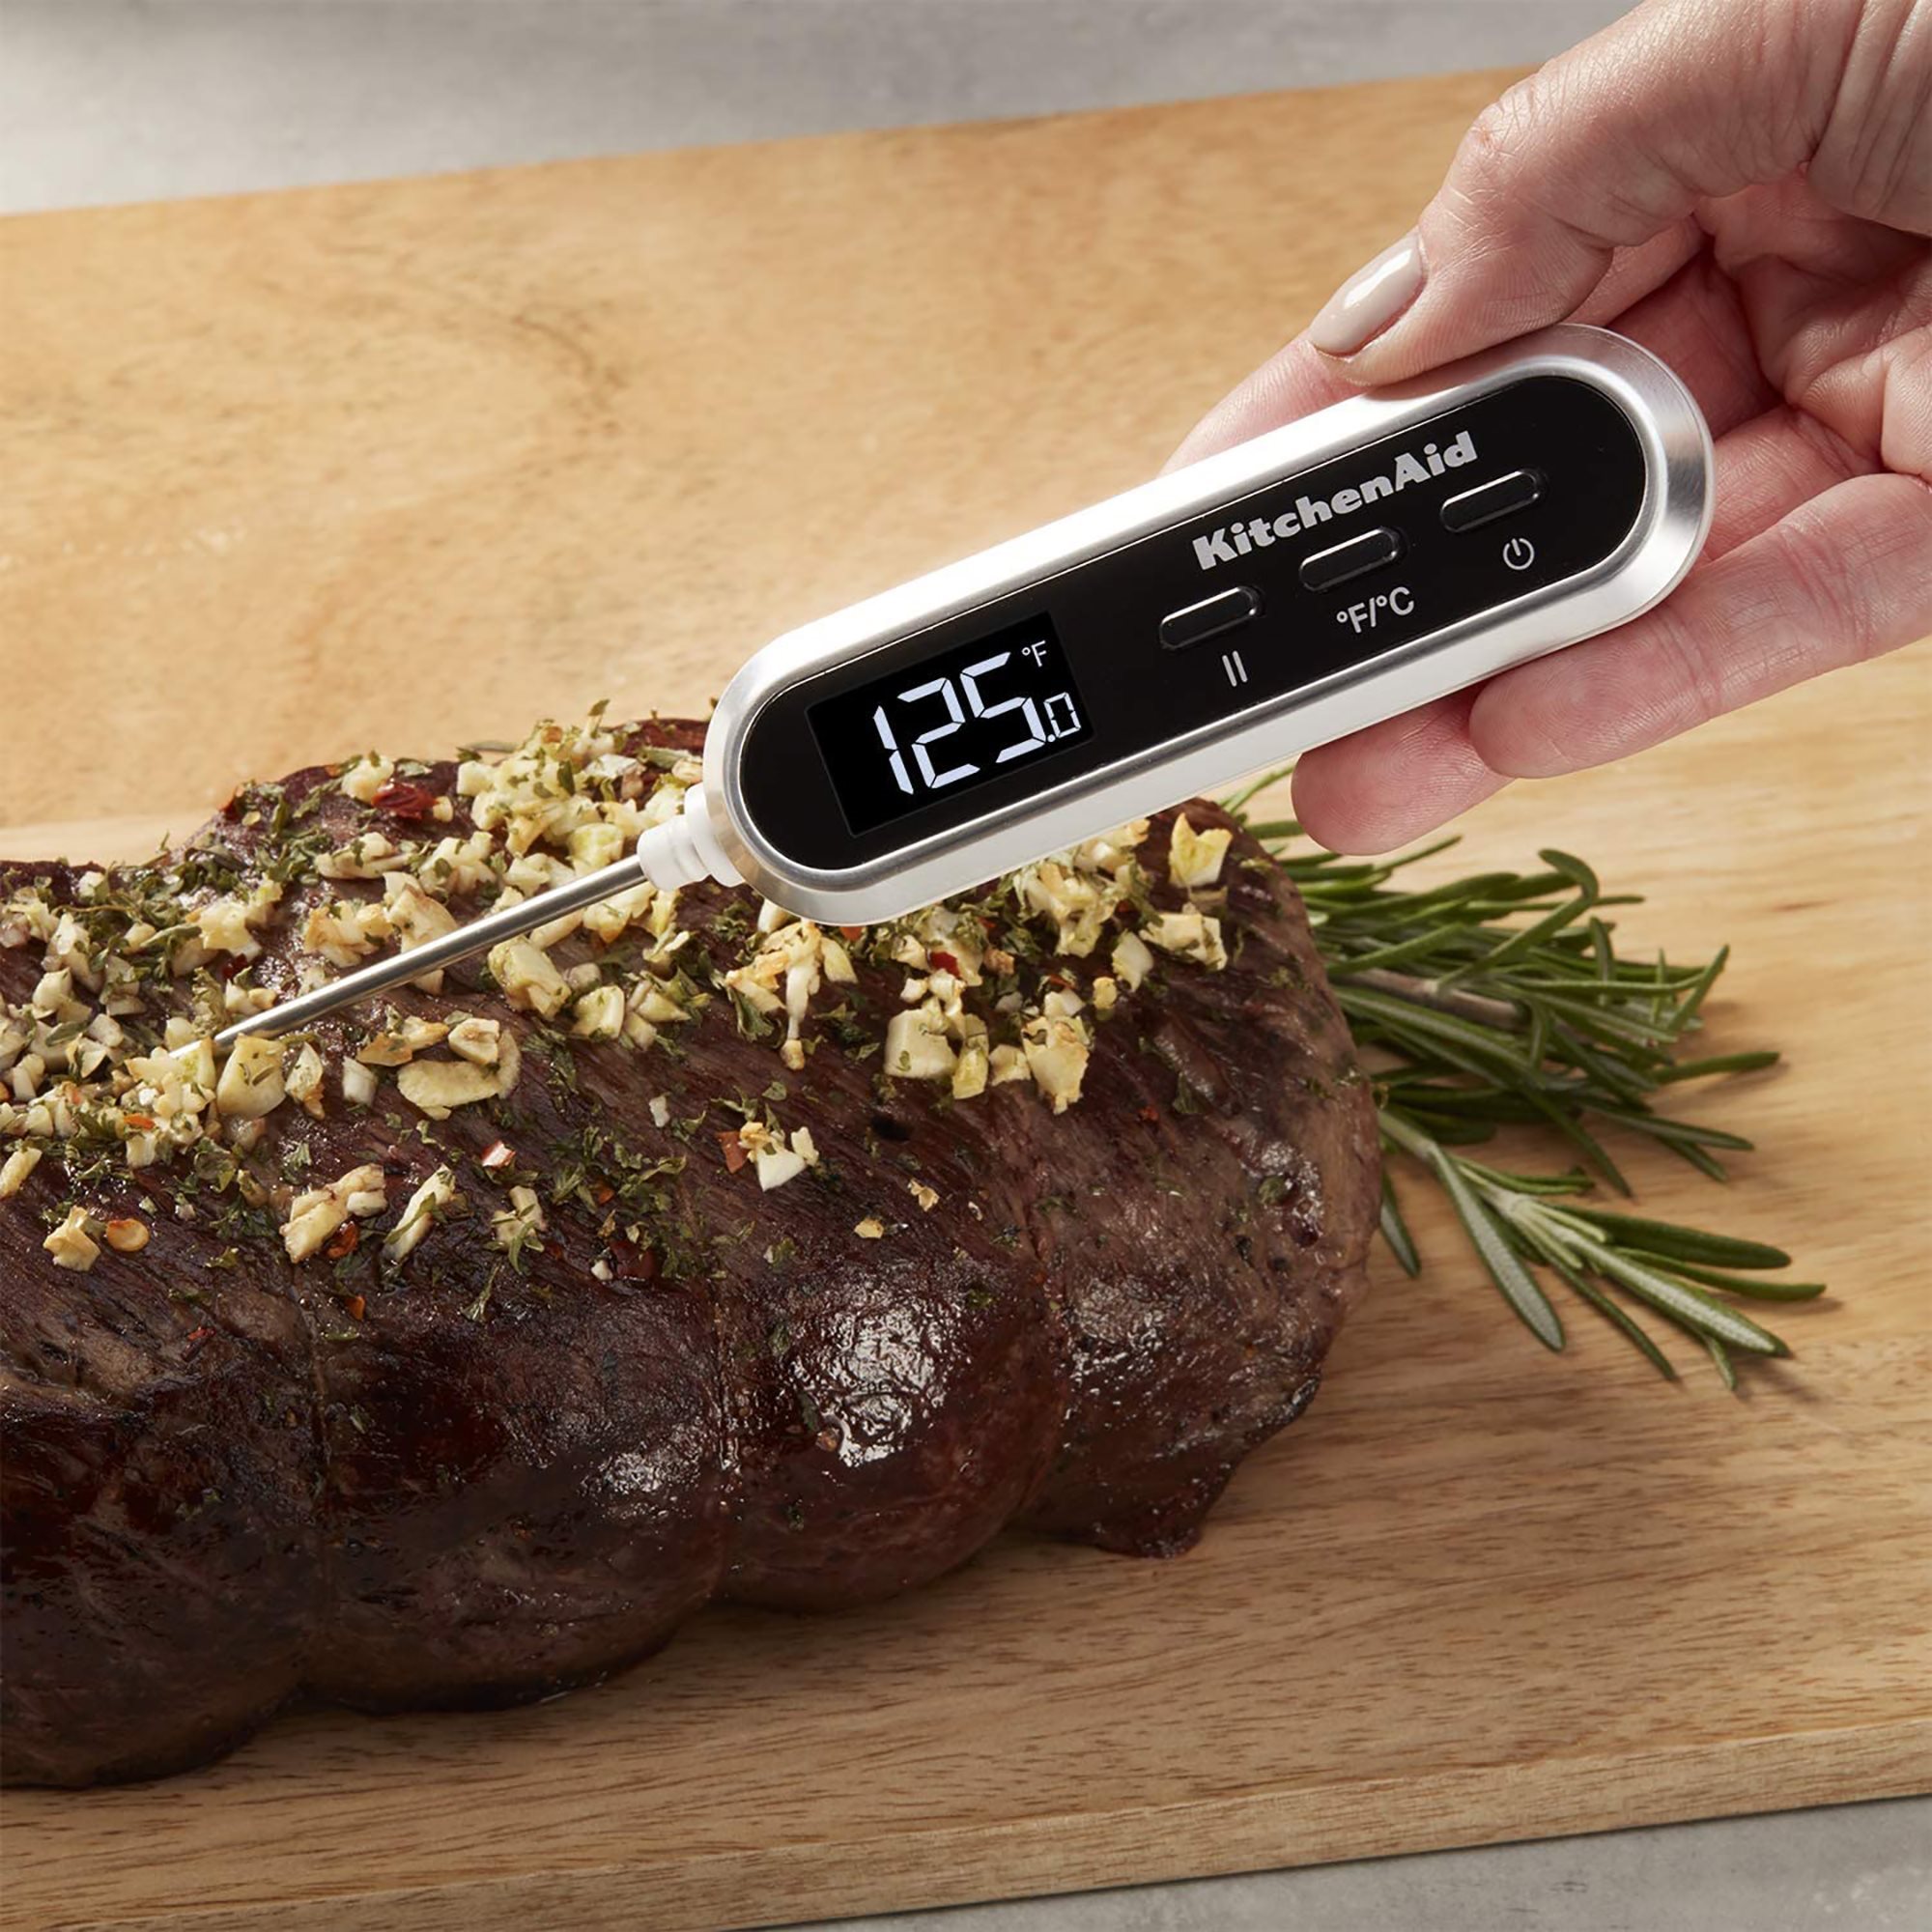 Digital meat thermometer - KitchenAid brand